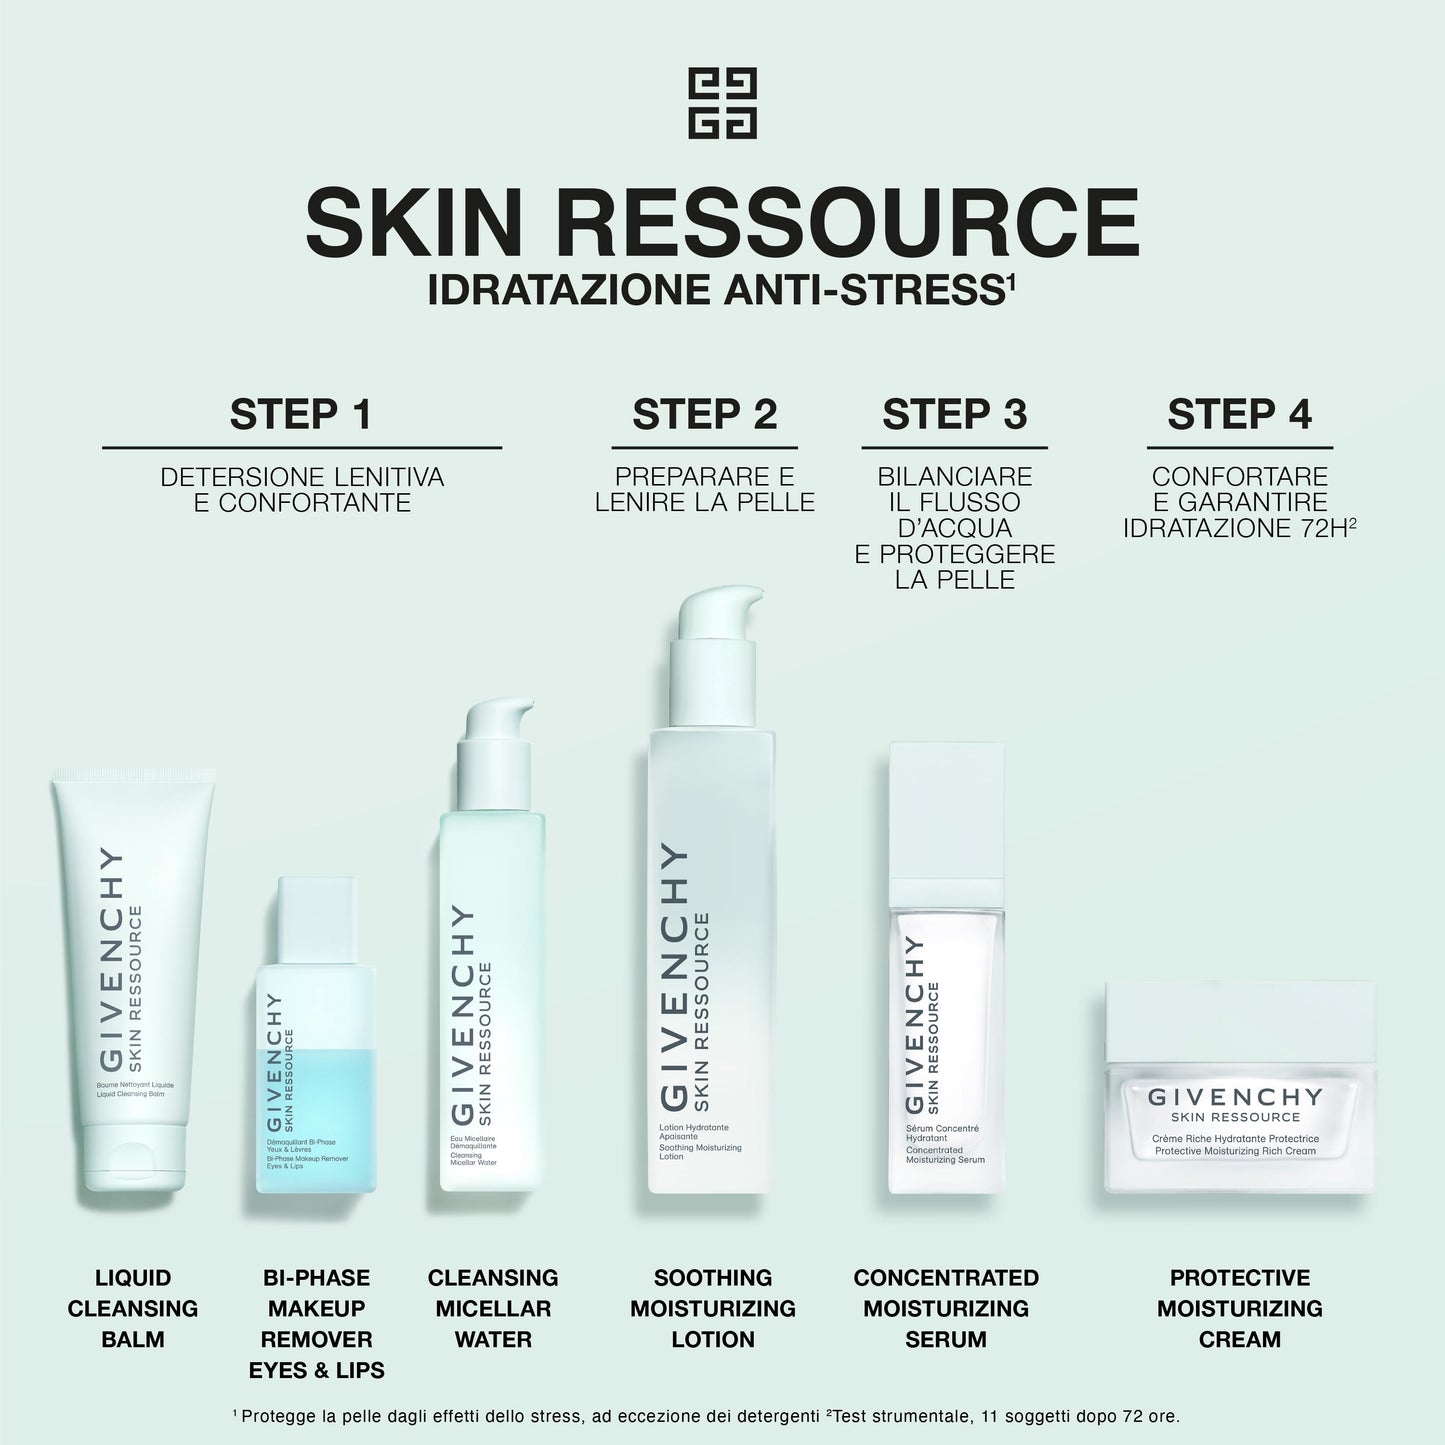 Skin Ressource Velvet Cream Protettiva Idratante Step 4